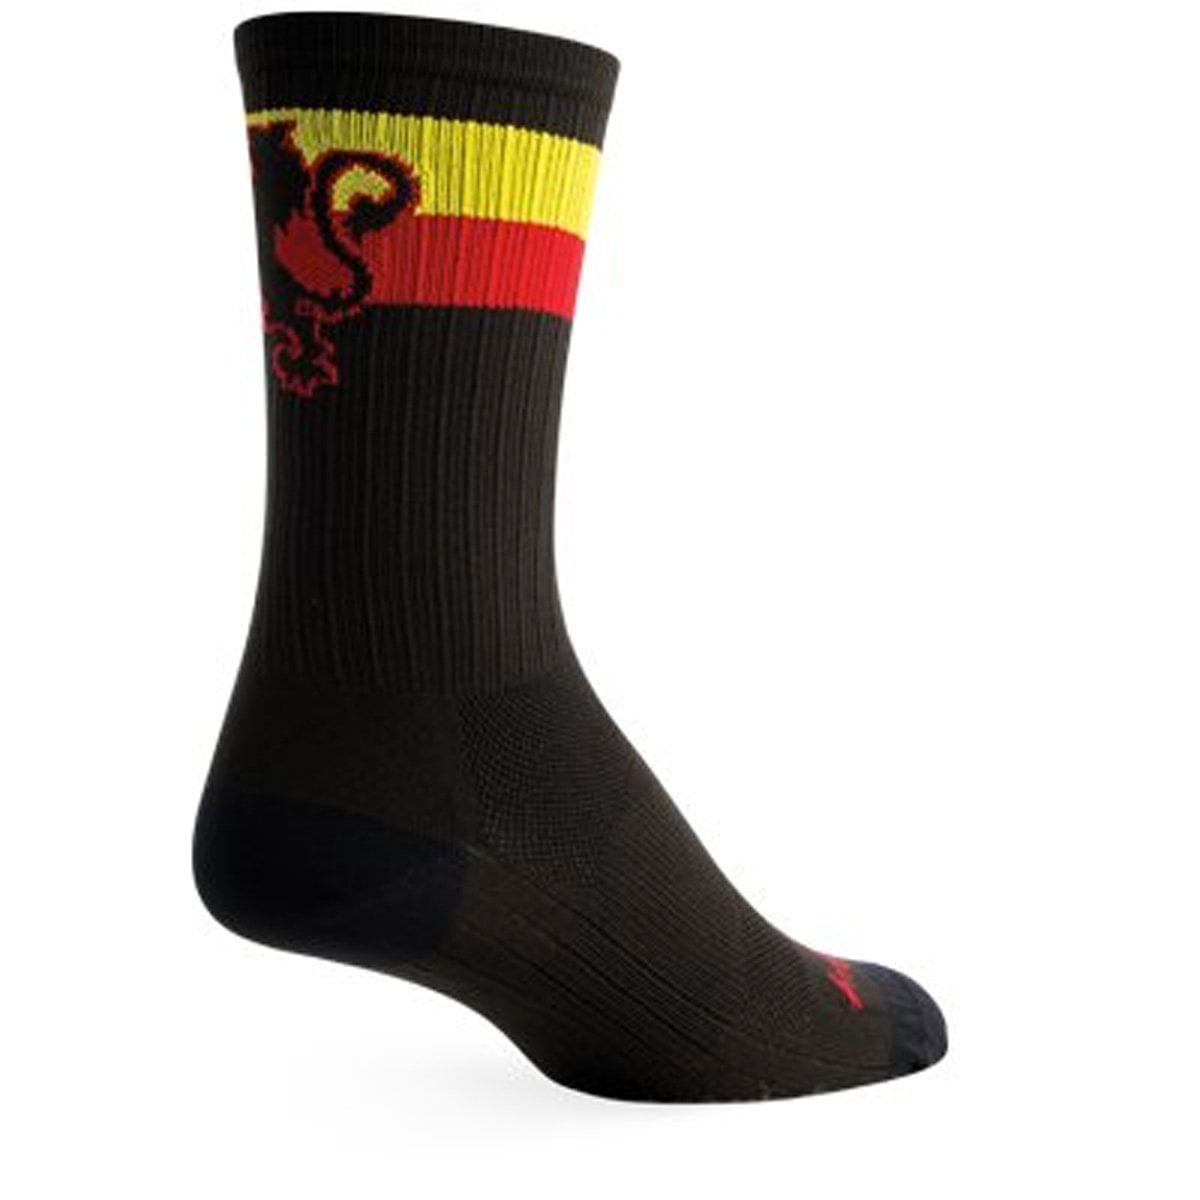 SockGuy SGX 6in Belgie Lion Performance Cycling/Running Socks 